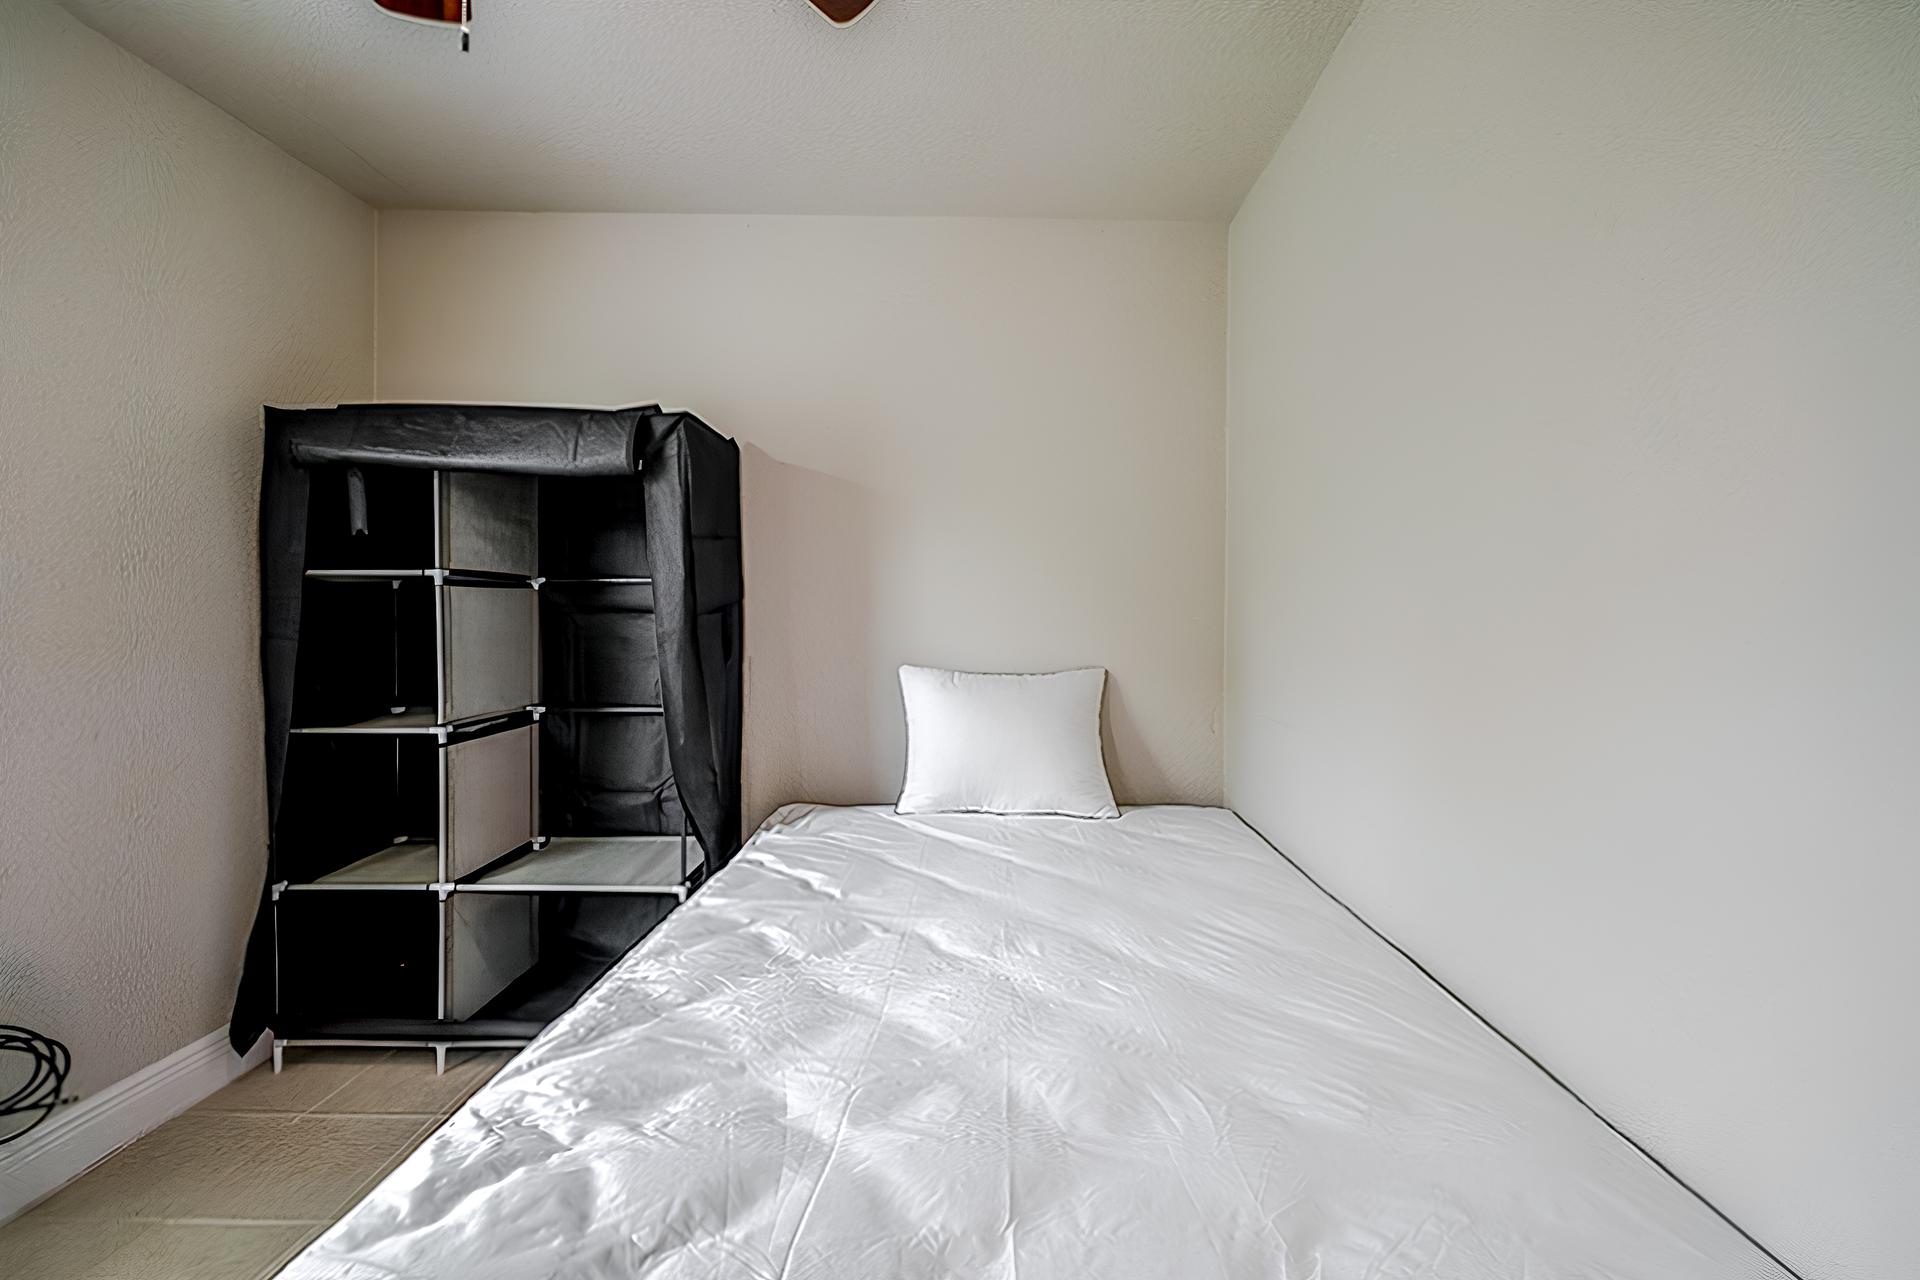 bedroom, detected: ceiling fan, hardwood, bed